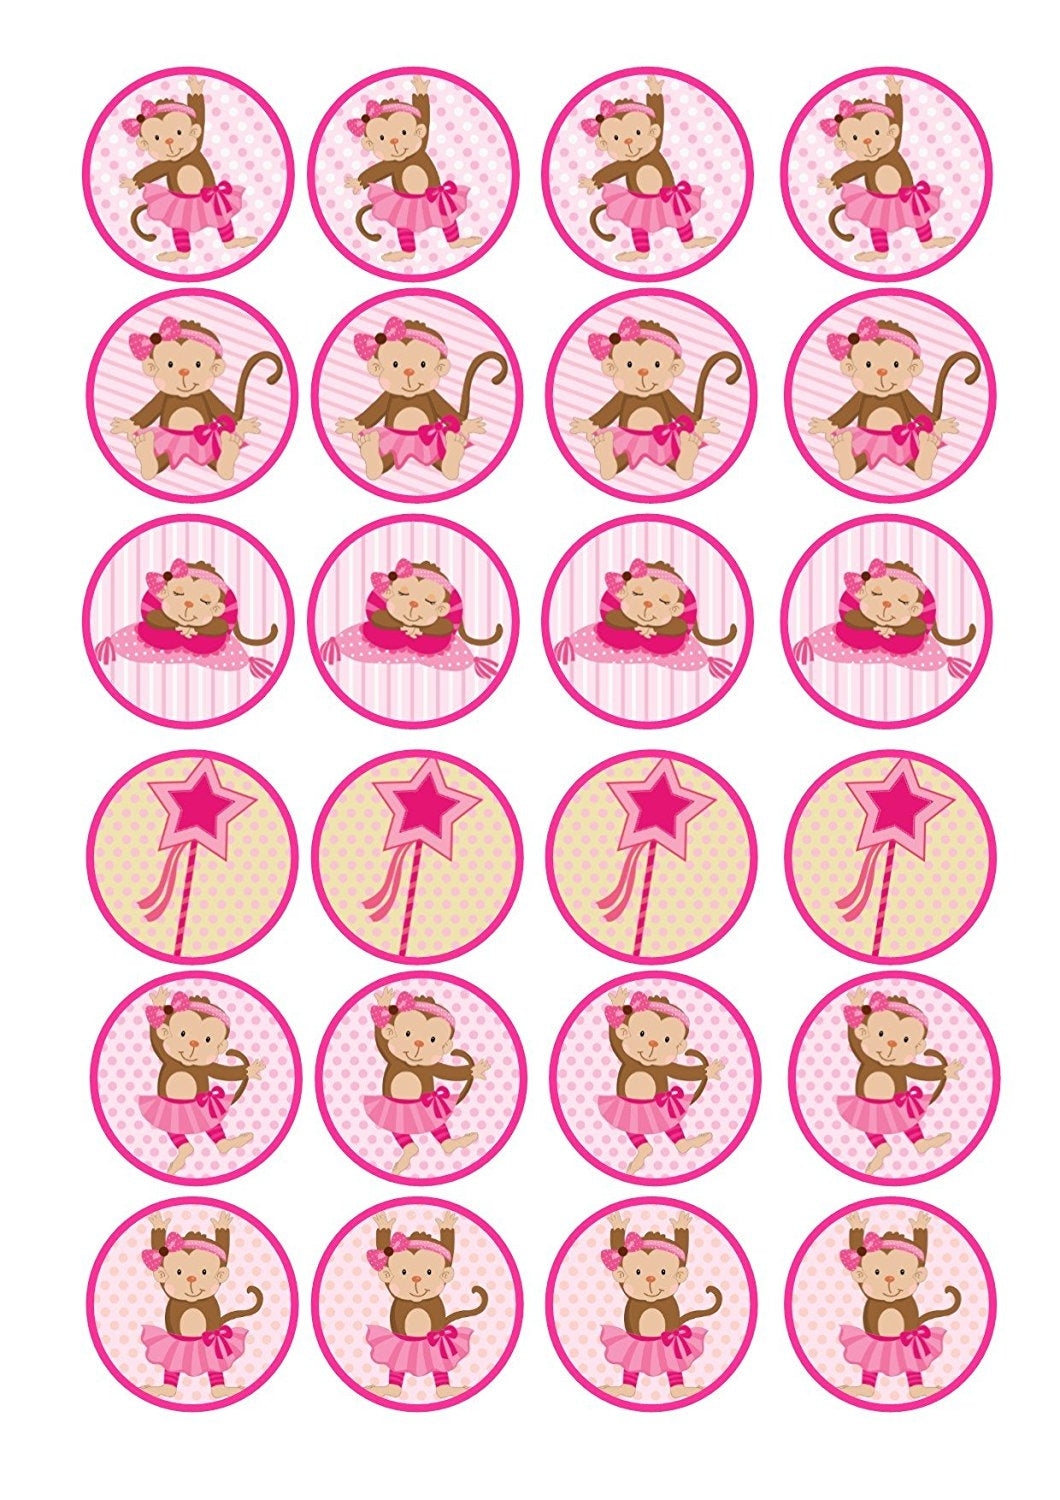 Monkey Ballet Ballerina Tutu Pink Bow Edible Cupcake Topper Images ABPID00652